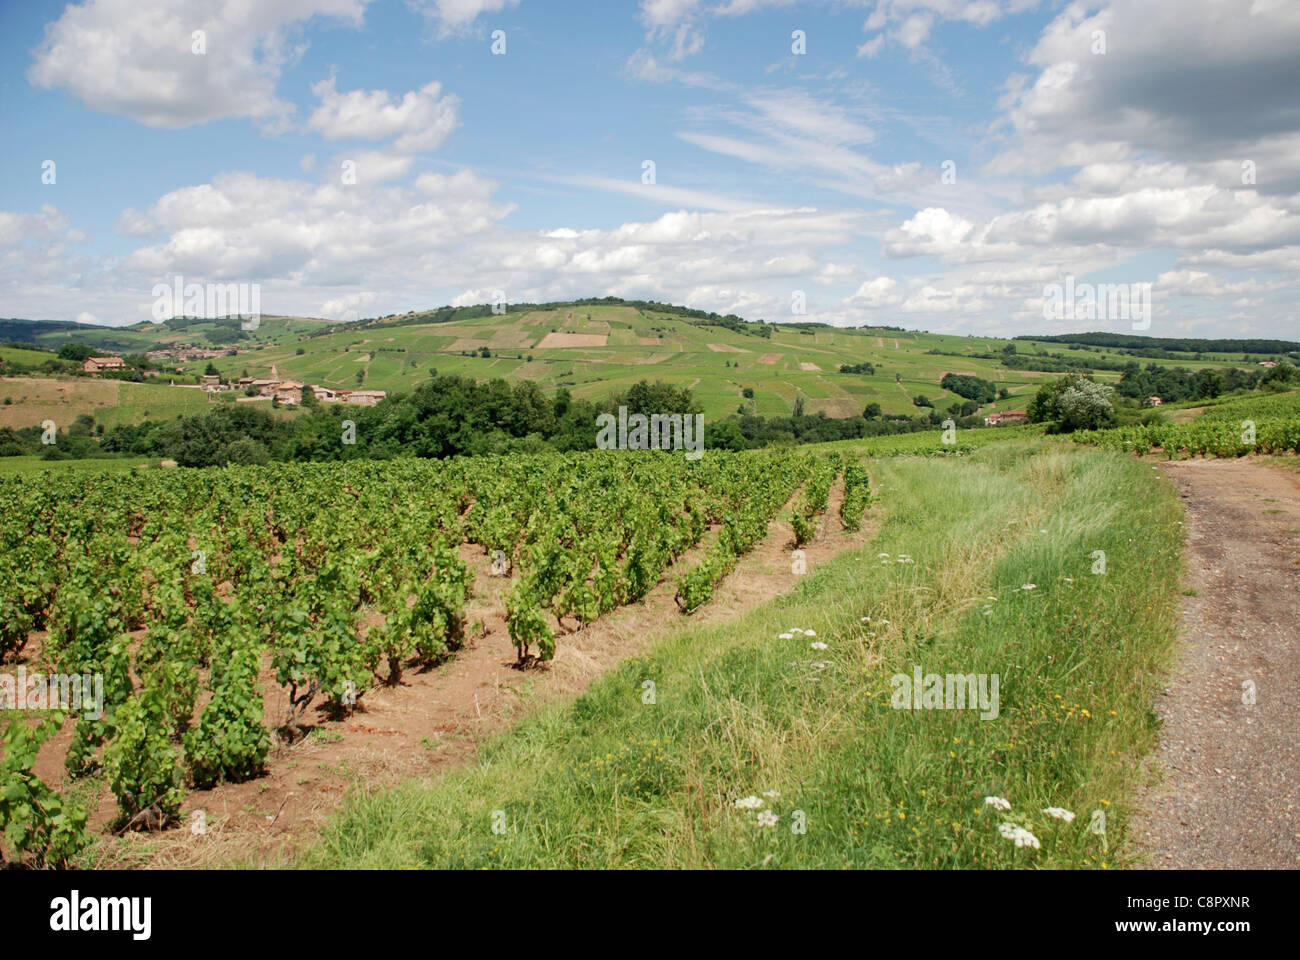 France, Burgundy, vineyards near Saint-Amour-Bellevue Stock Photo